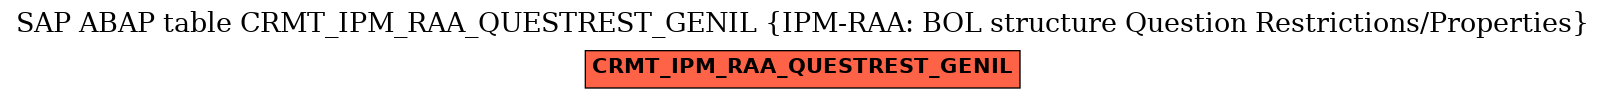 E-R Diagram for table CRMT_IPM_RAA_QUESTREST_GENIL (IPM-RAA: BOL structure Question Restrictions/Properties)